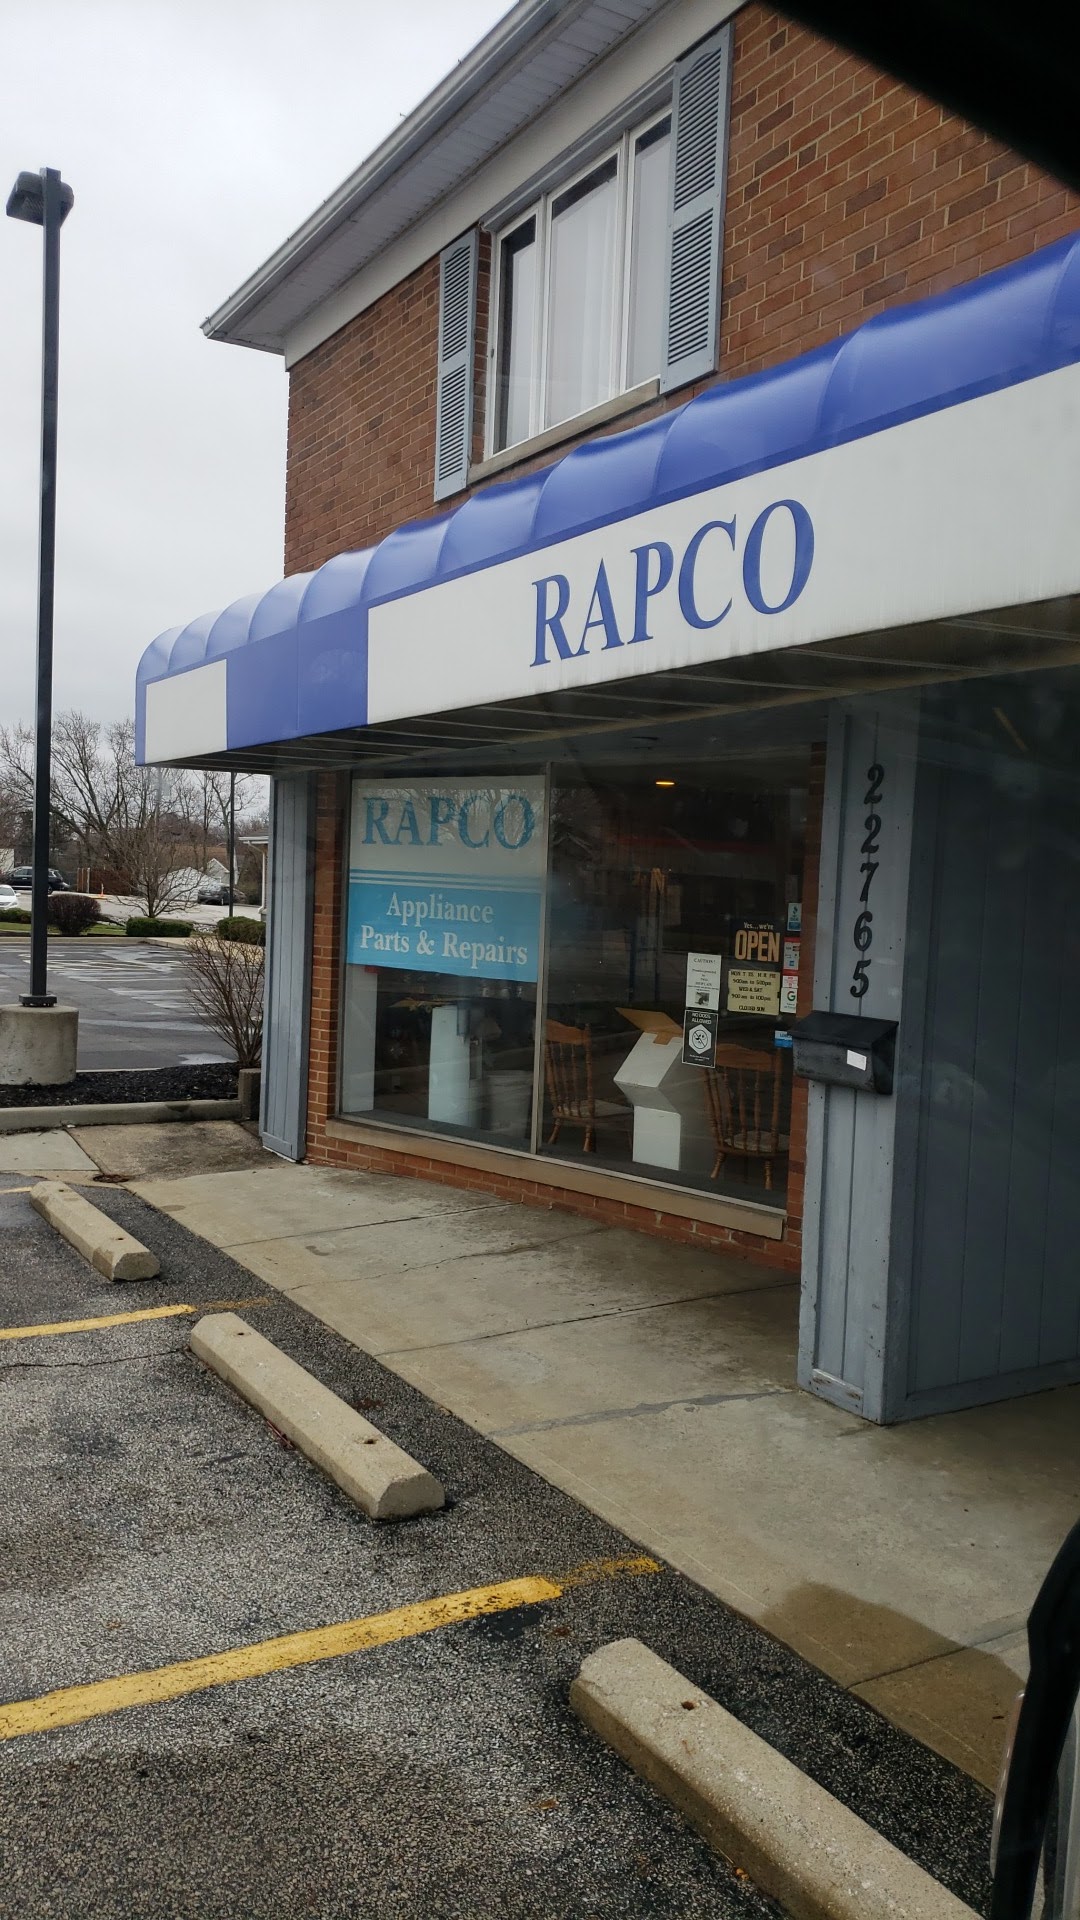 Rapco Appliance Parts & Repairs 22765 Lorain Rd, Fairview Park Ohio 44126